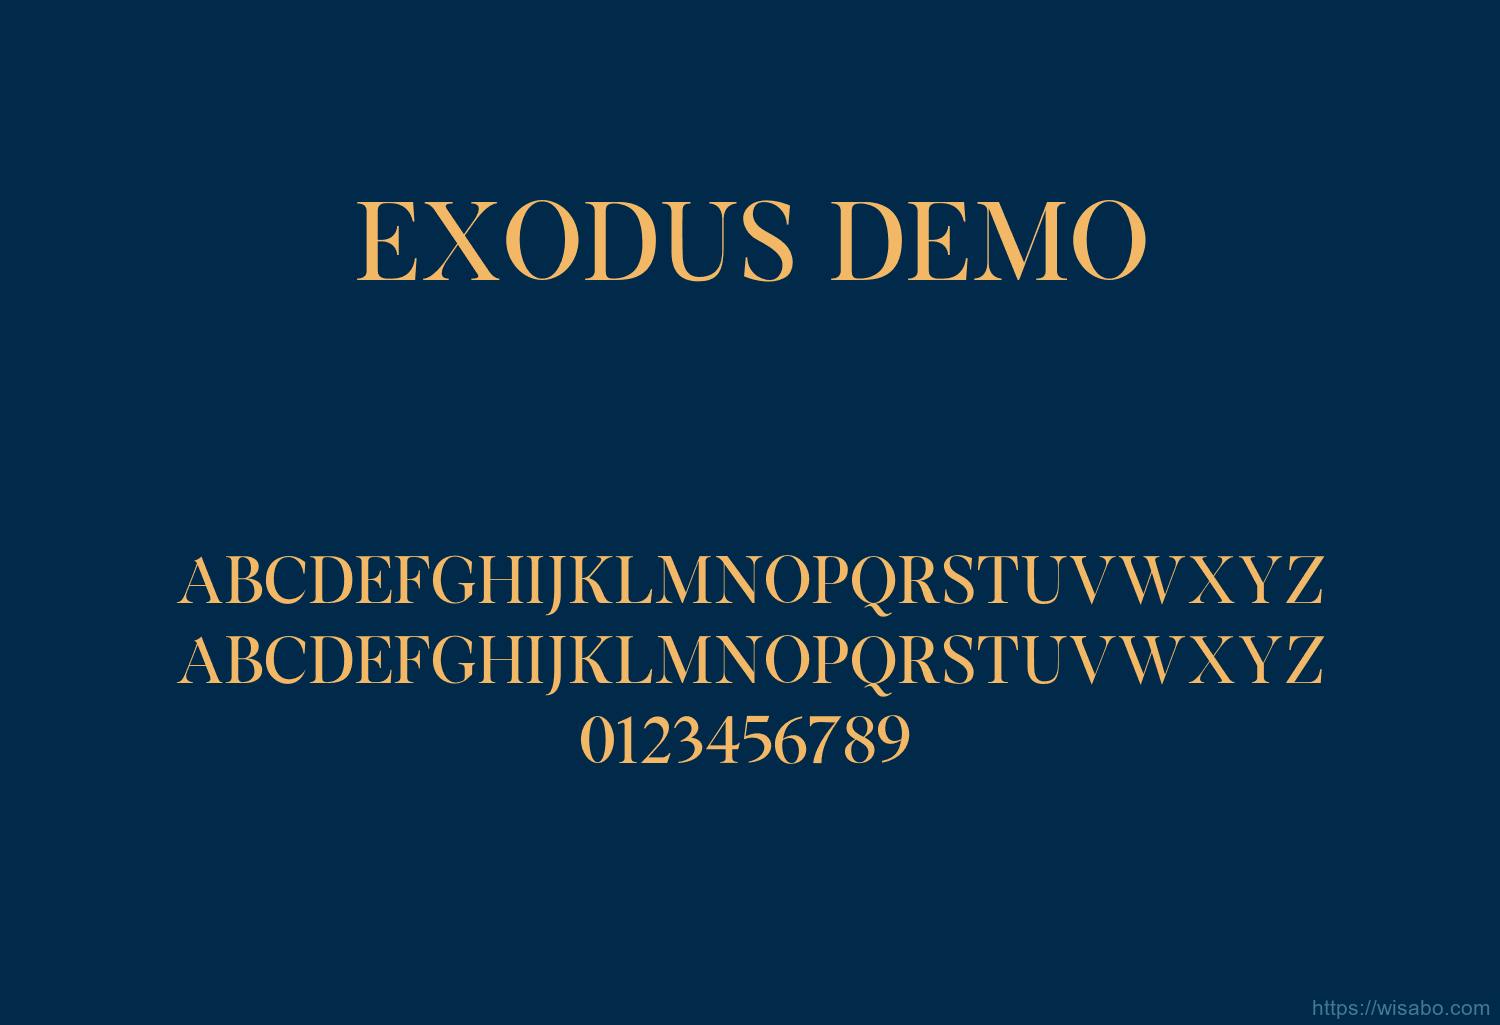 Exodus Demo